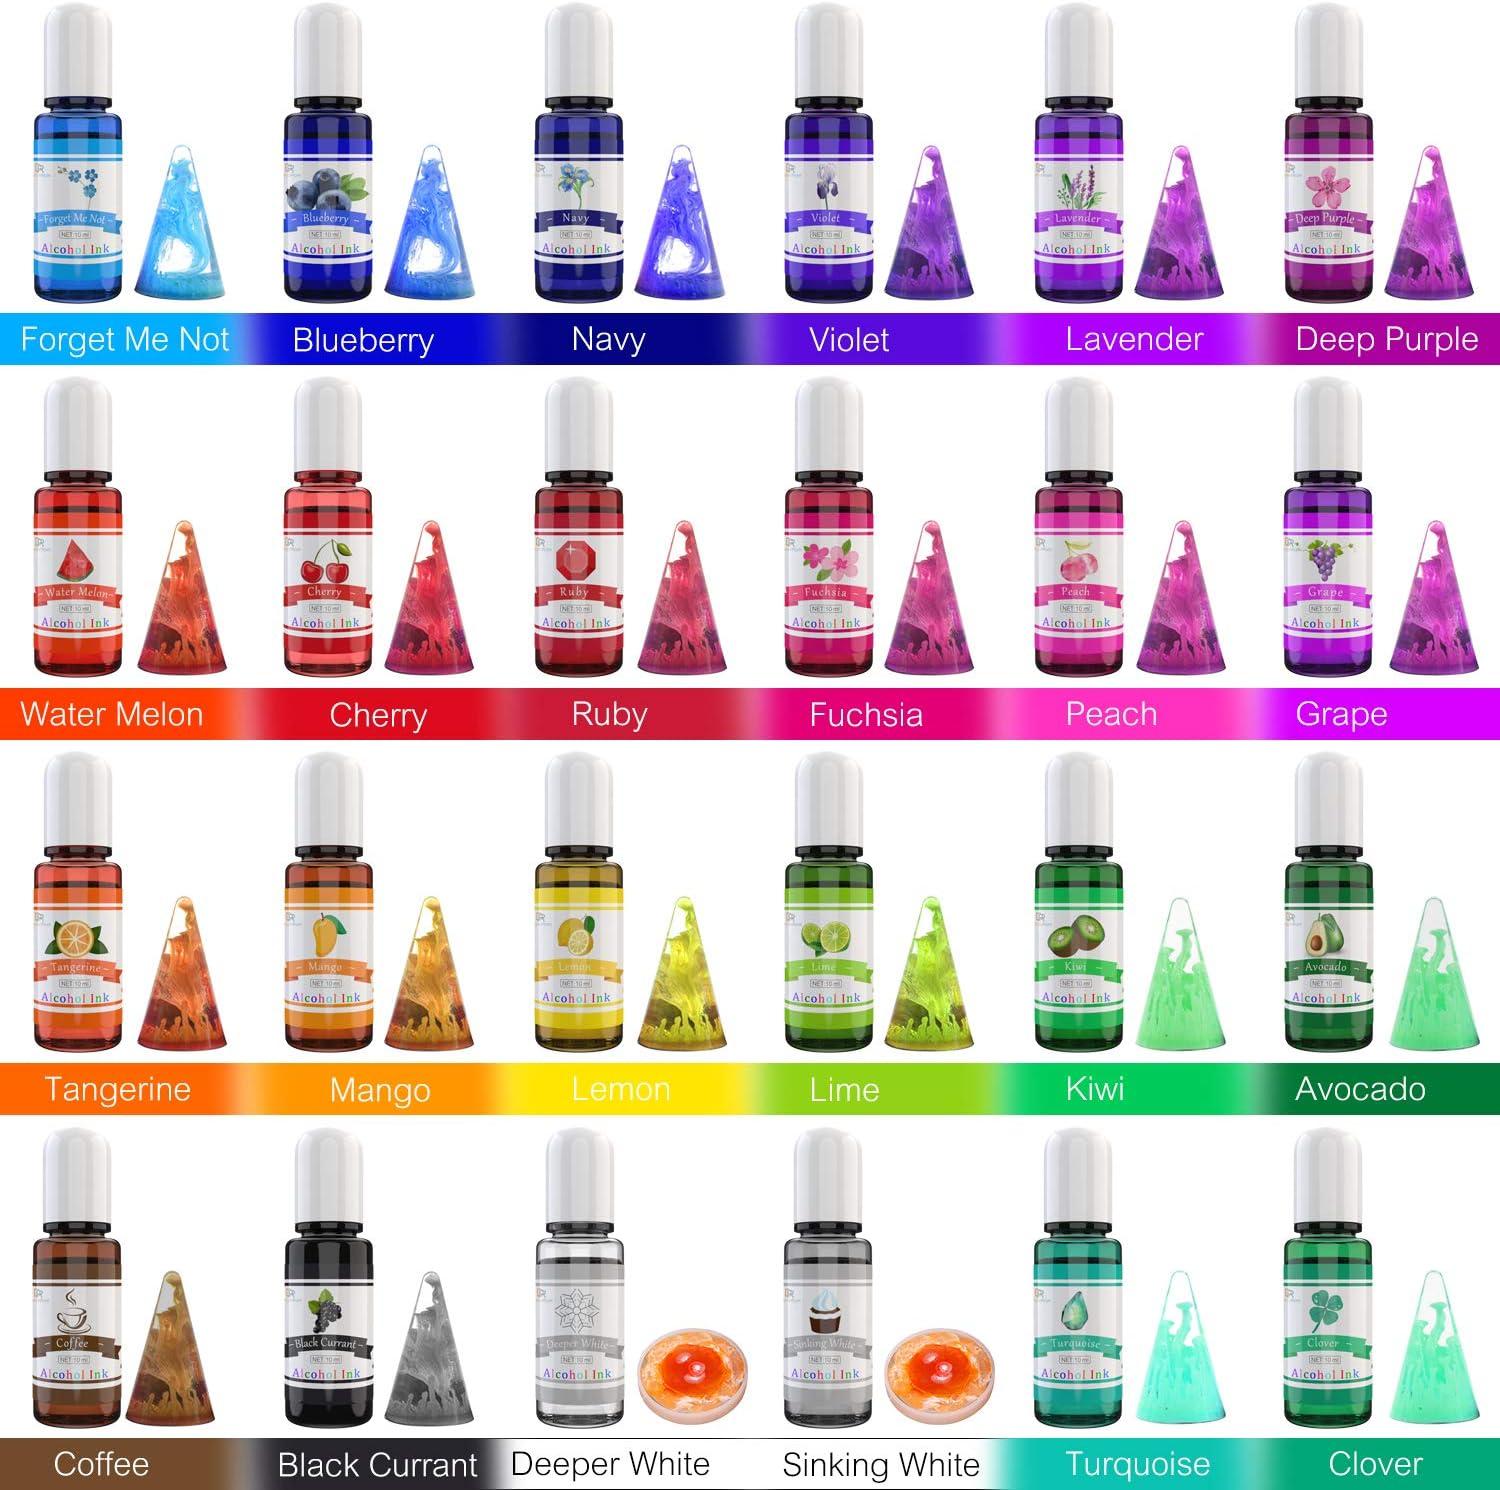 Alcohol Ink Set Epoxy Resin Dye Vibrant Colors Alcohol Based Resin